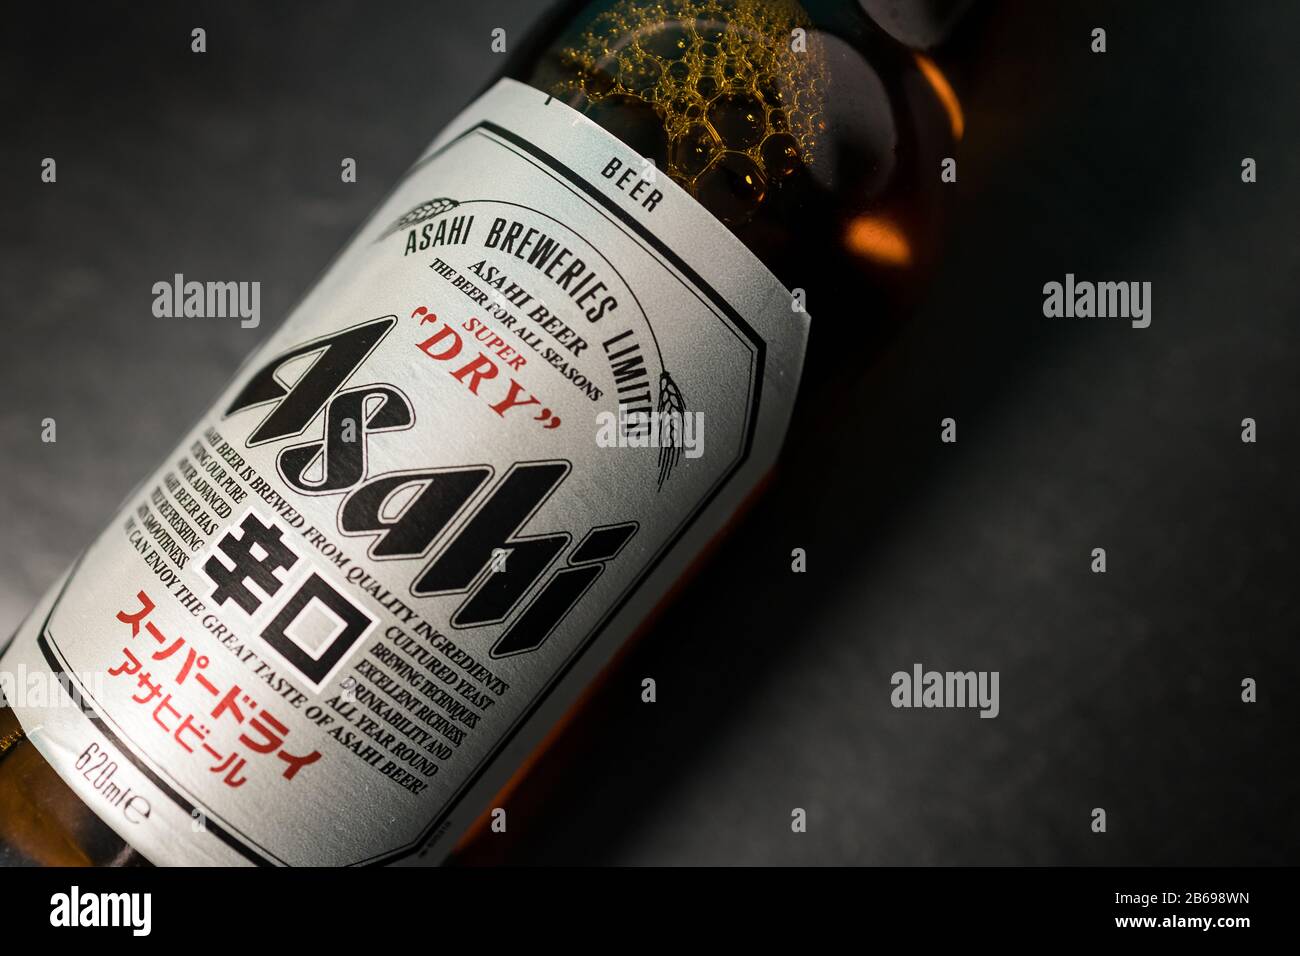 London - 03. MÄRZ 2020: Asahi Lagerbierflasche aus Japan Stockfoto